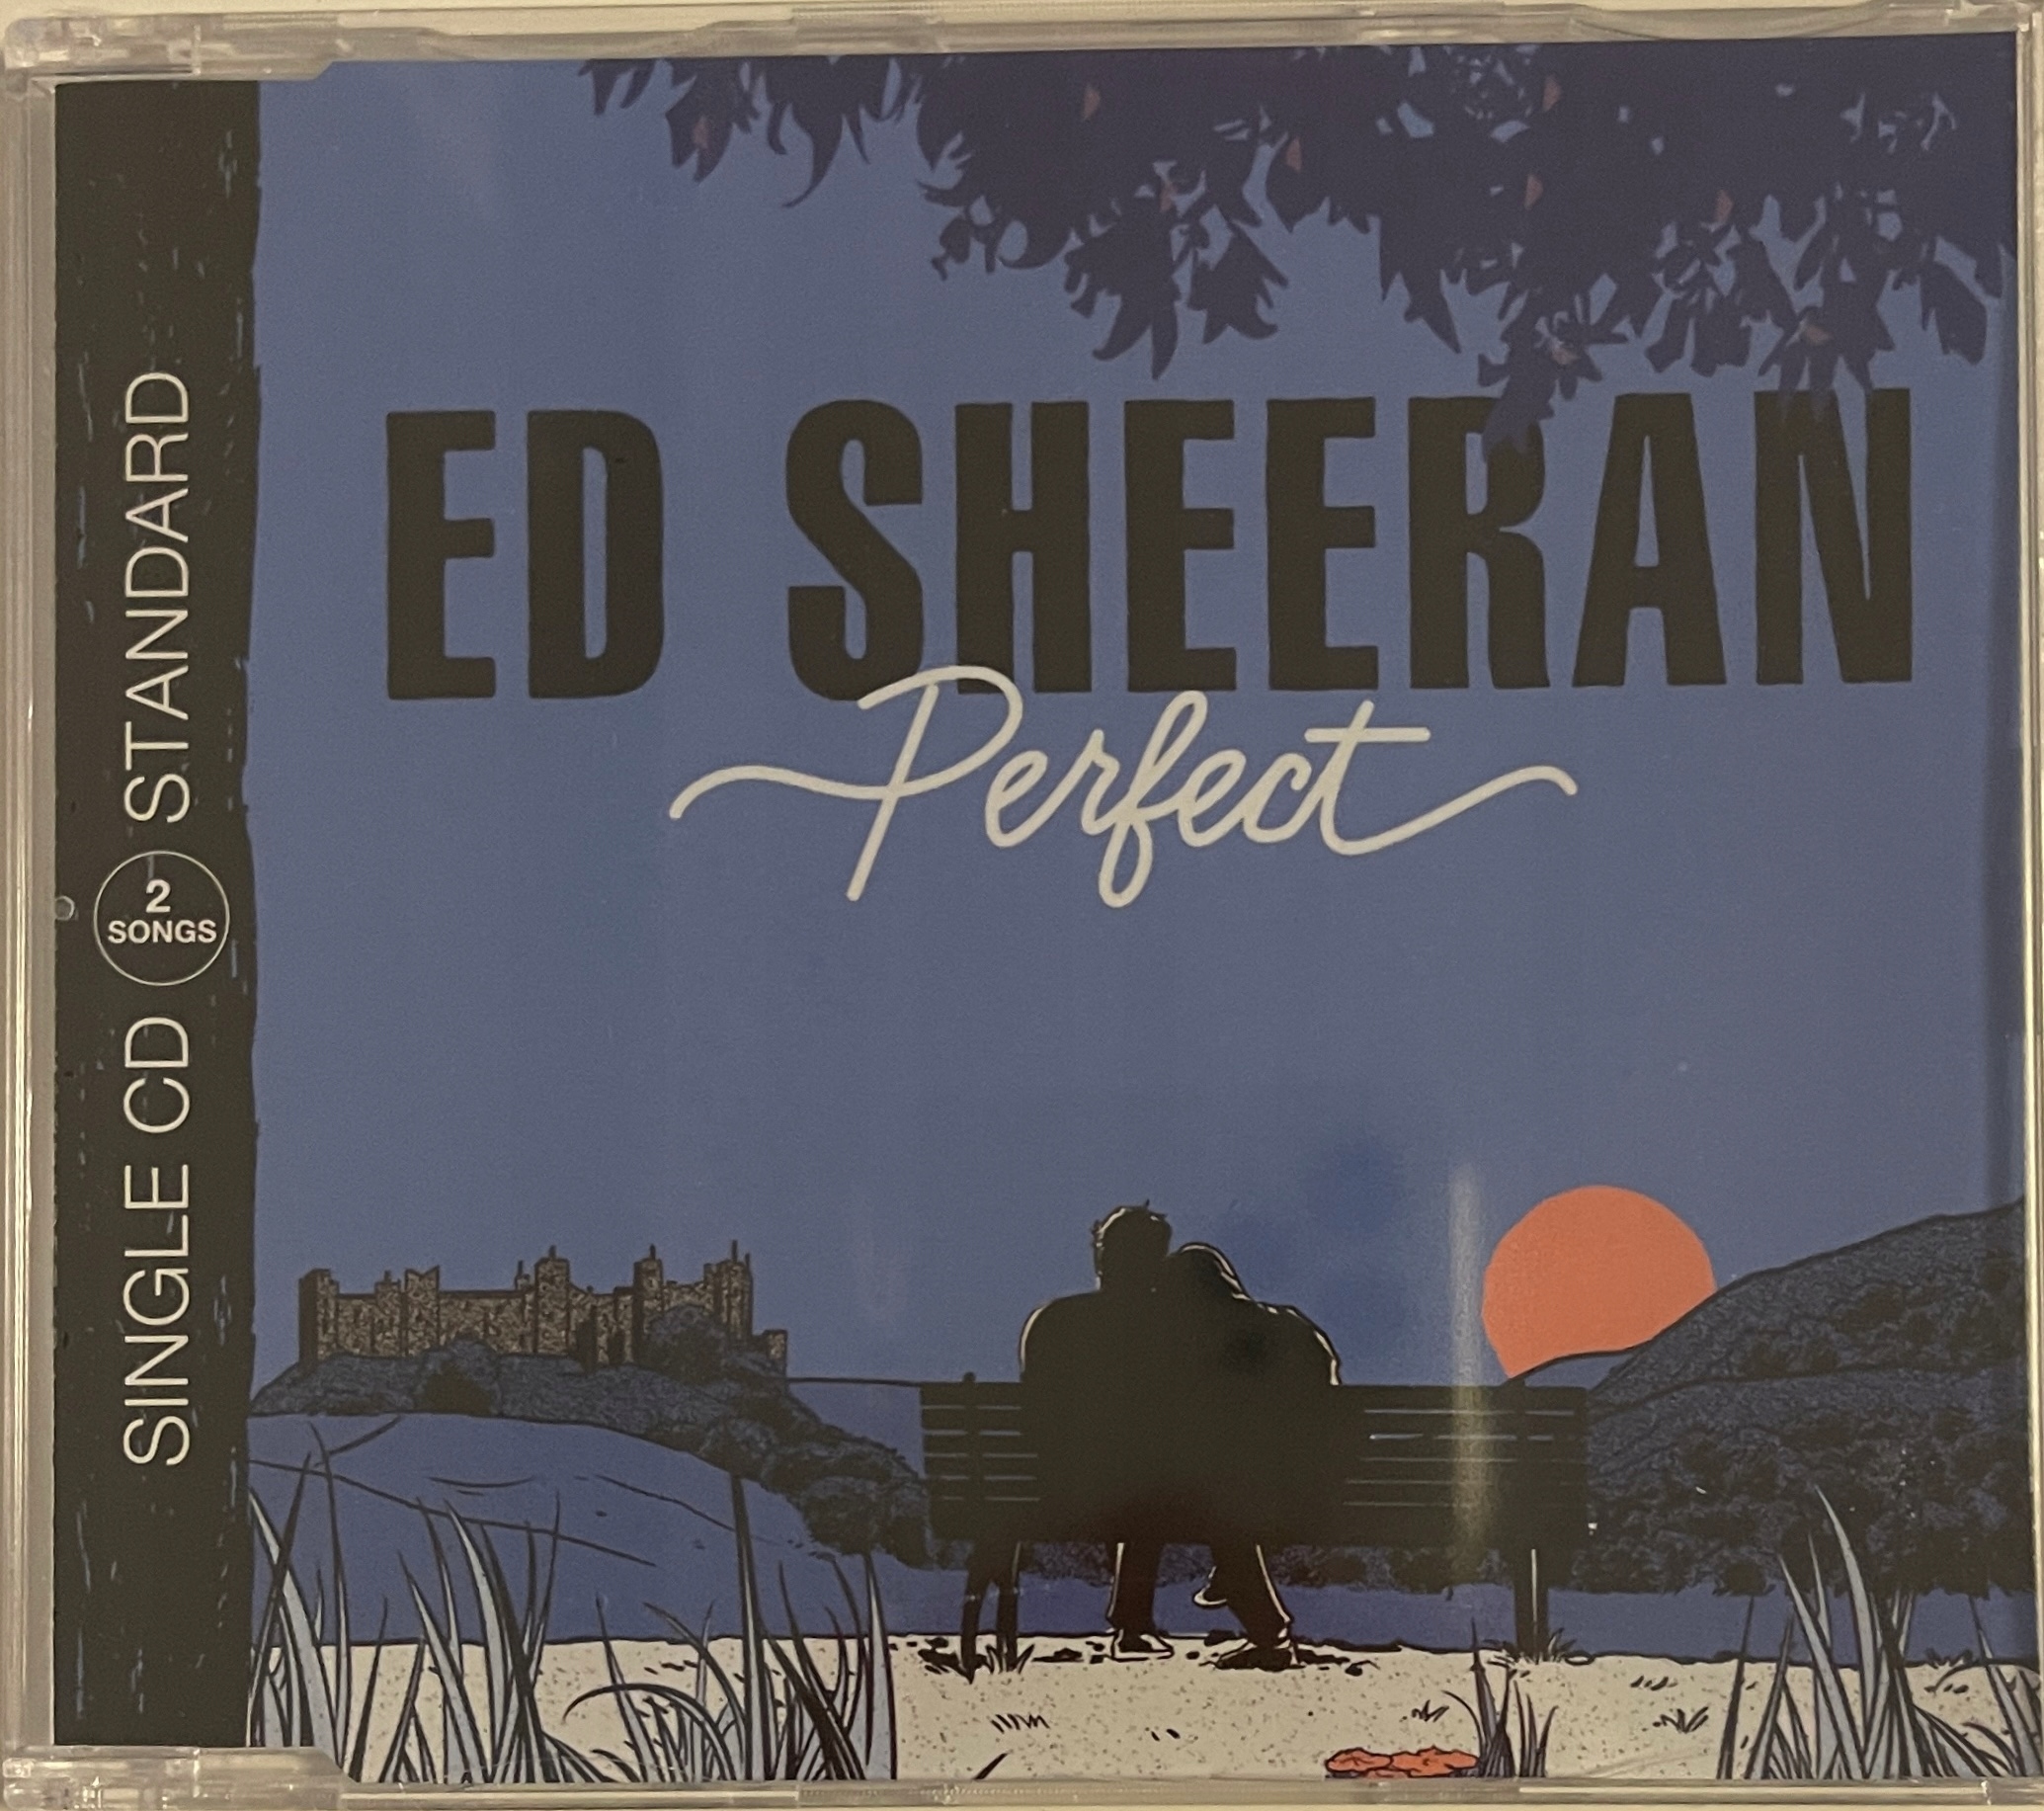 CD Perfect Sheeran - porównaj ceny - Allegro.pl